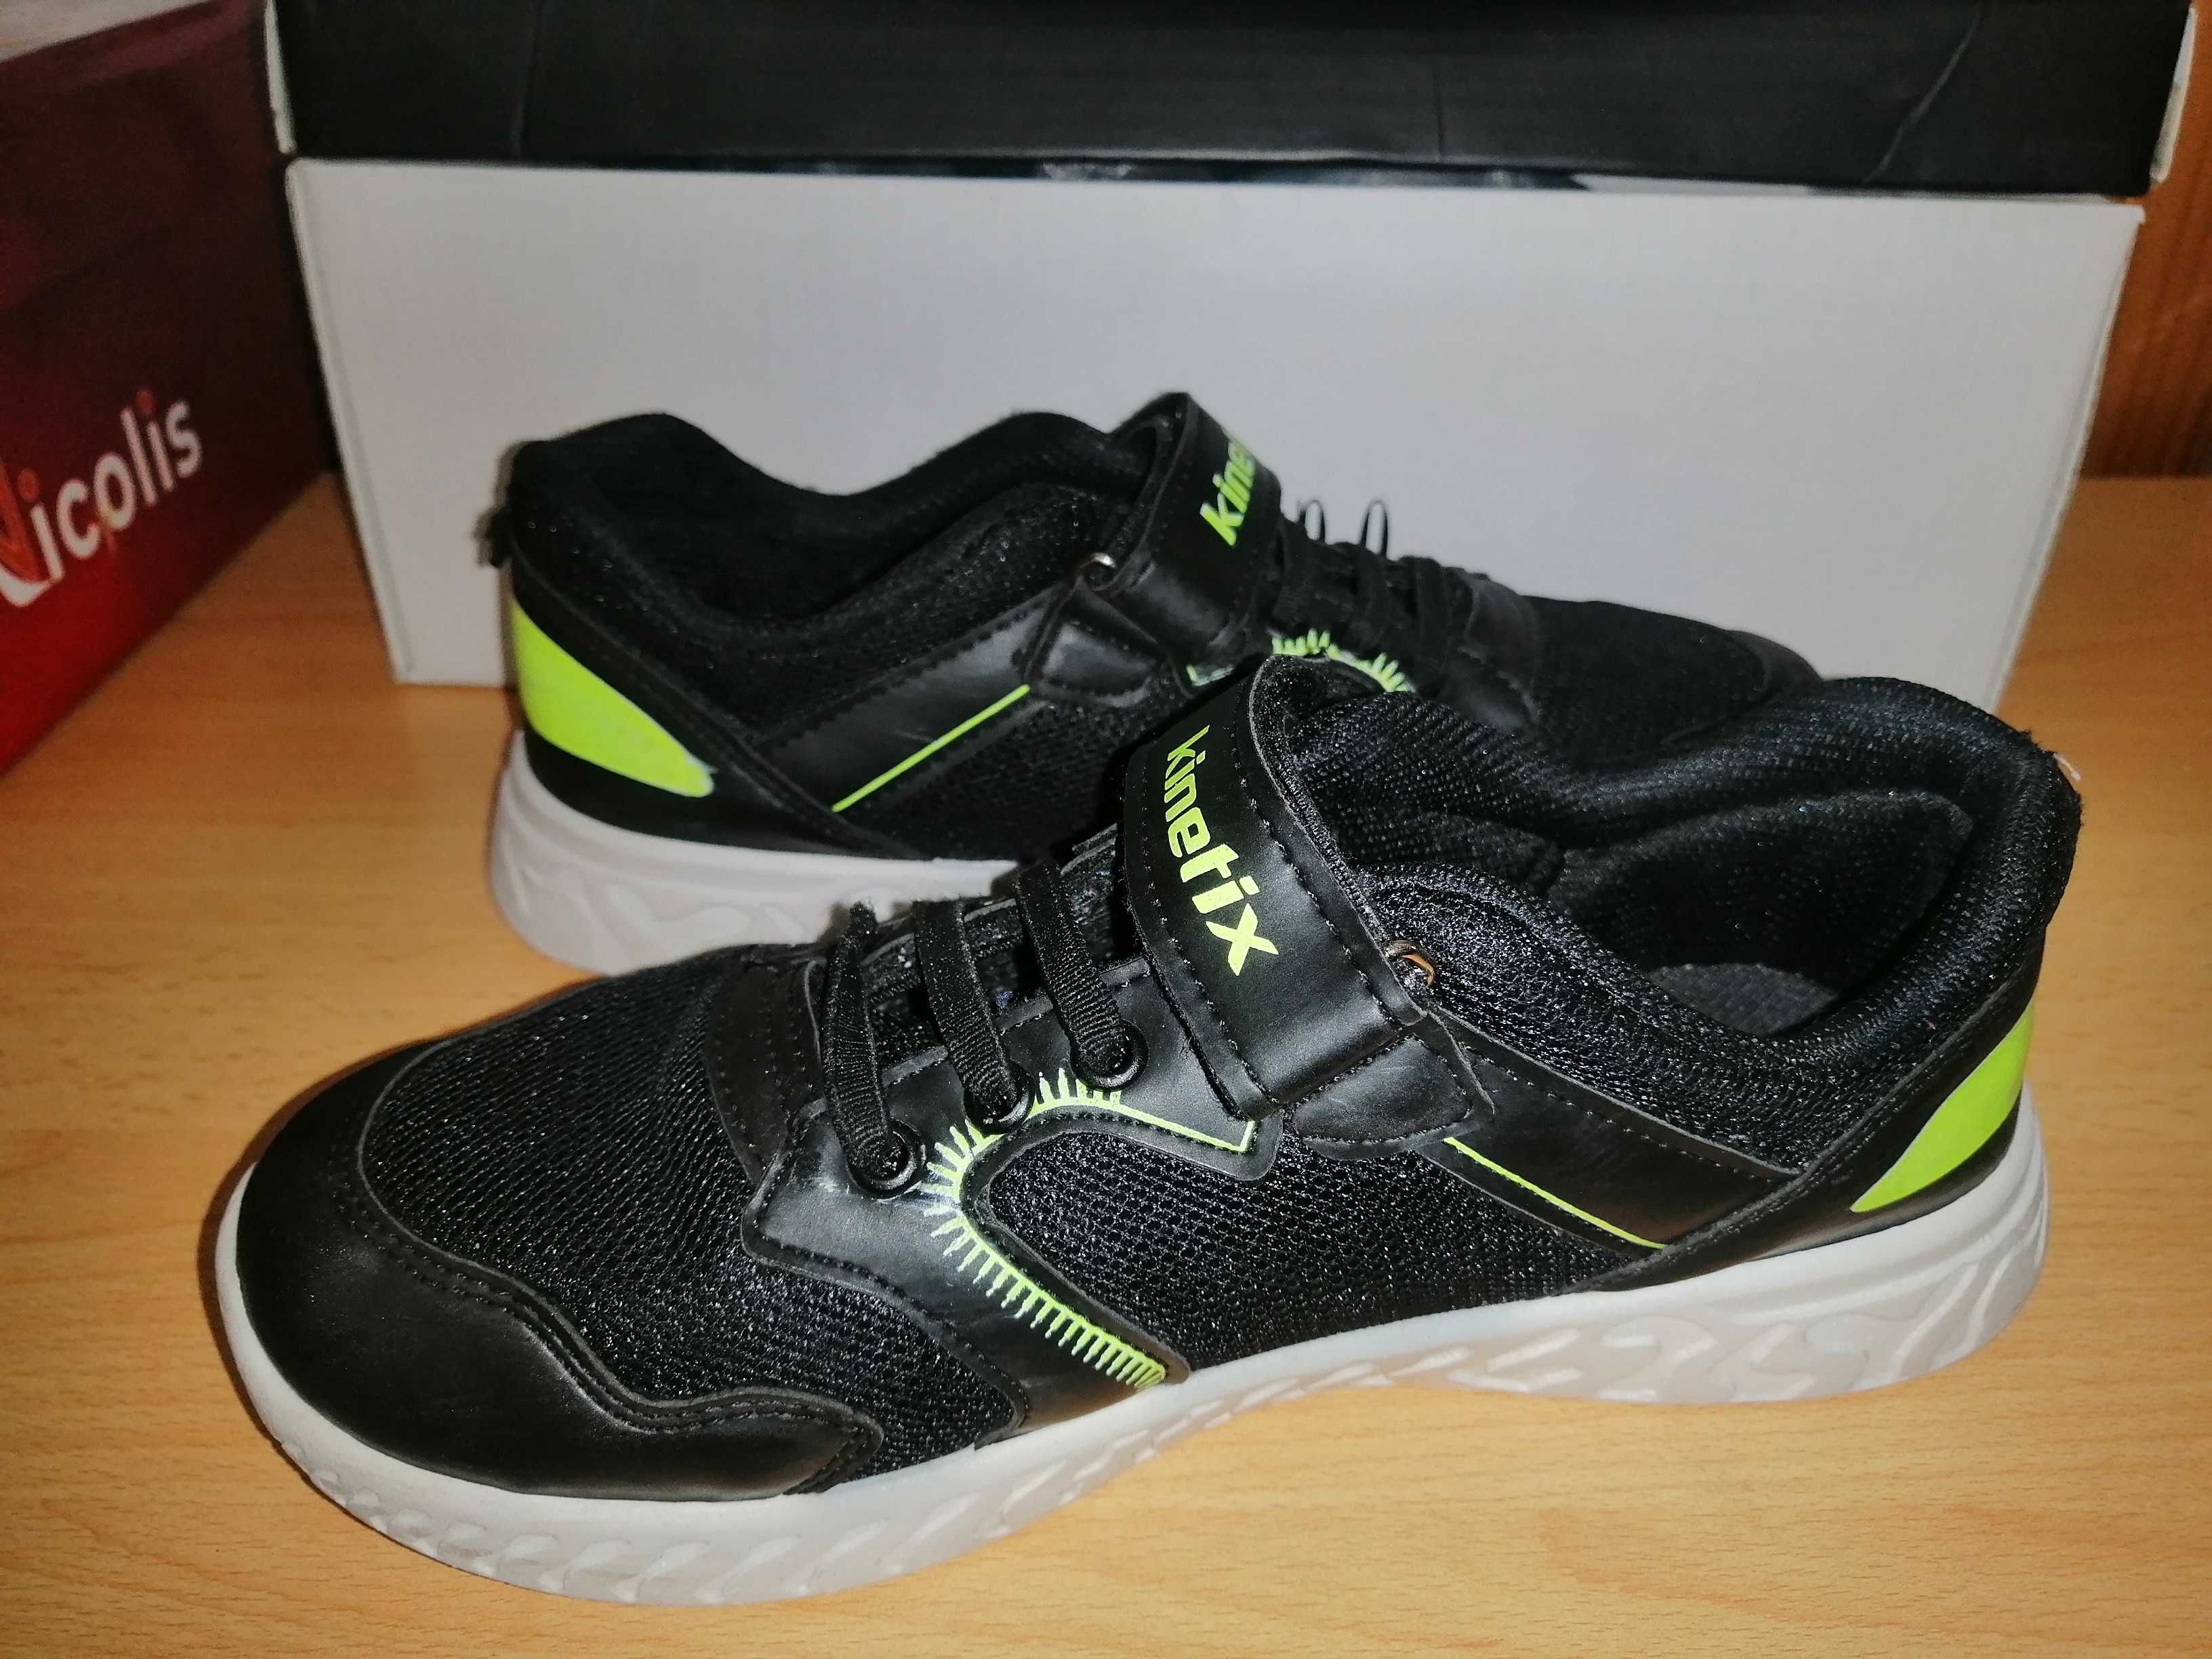 Adidasi Kinetix pantofi sport